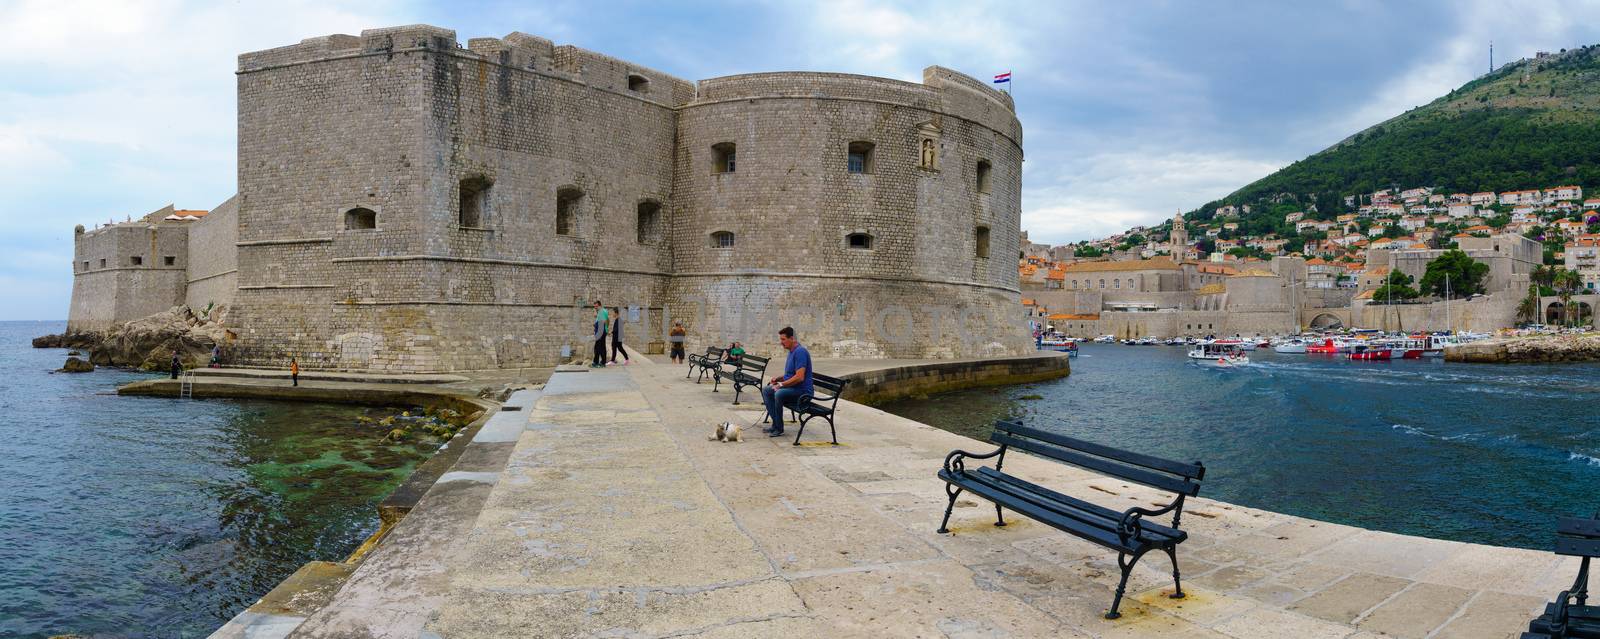 Porporela, Dubrovnik by RnDmS